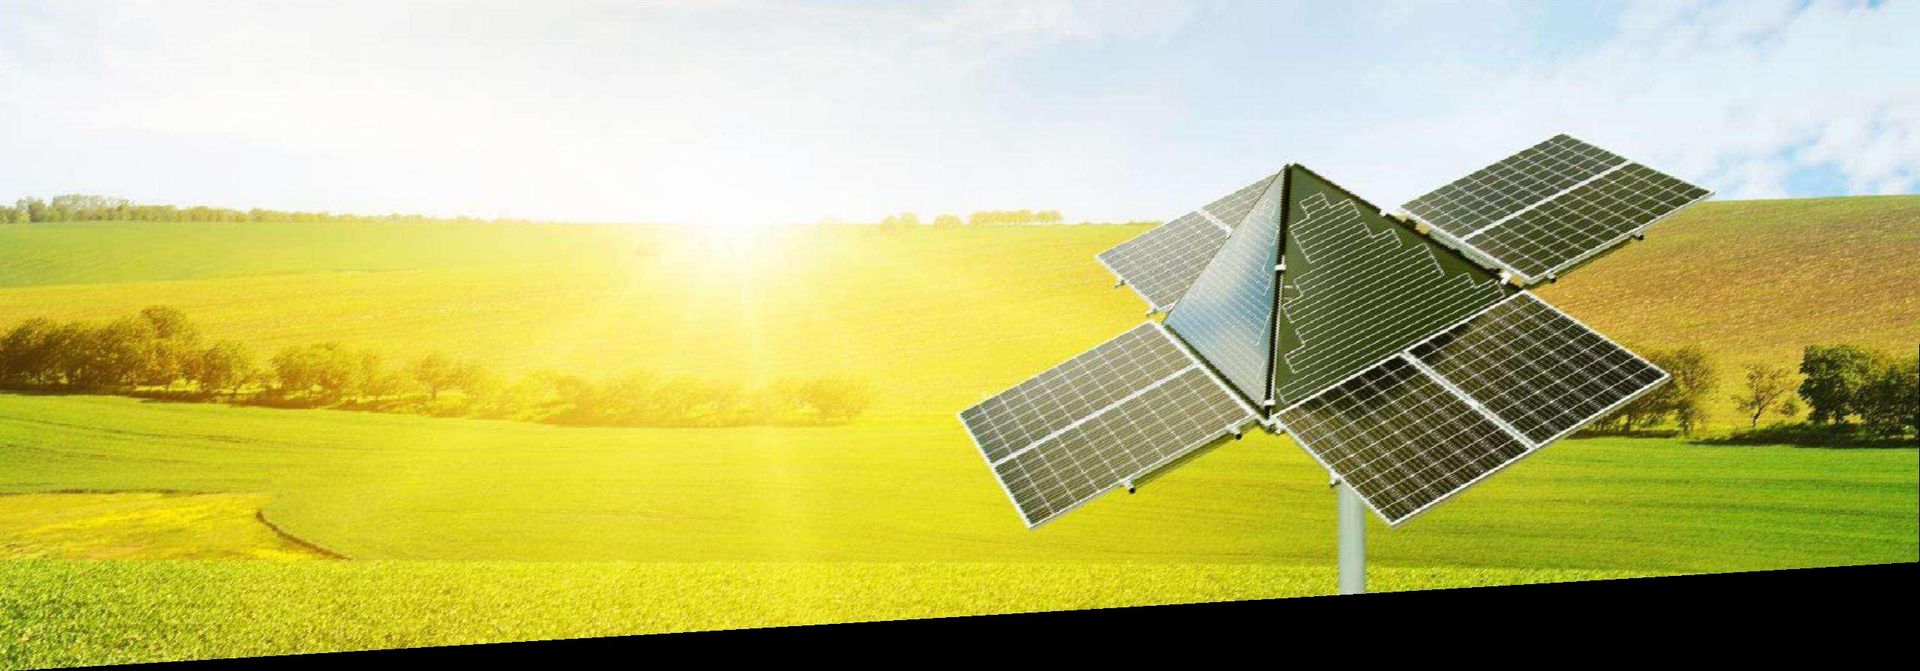 Global Solar Systems GmbH